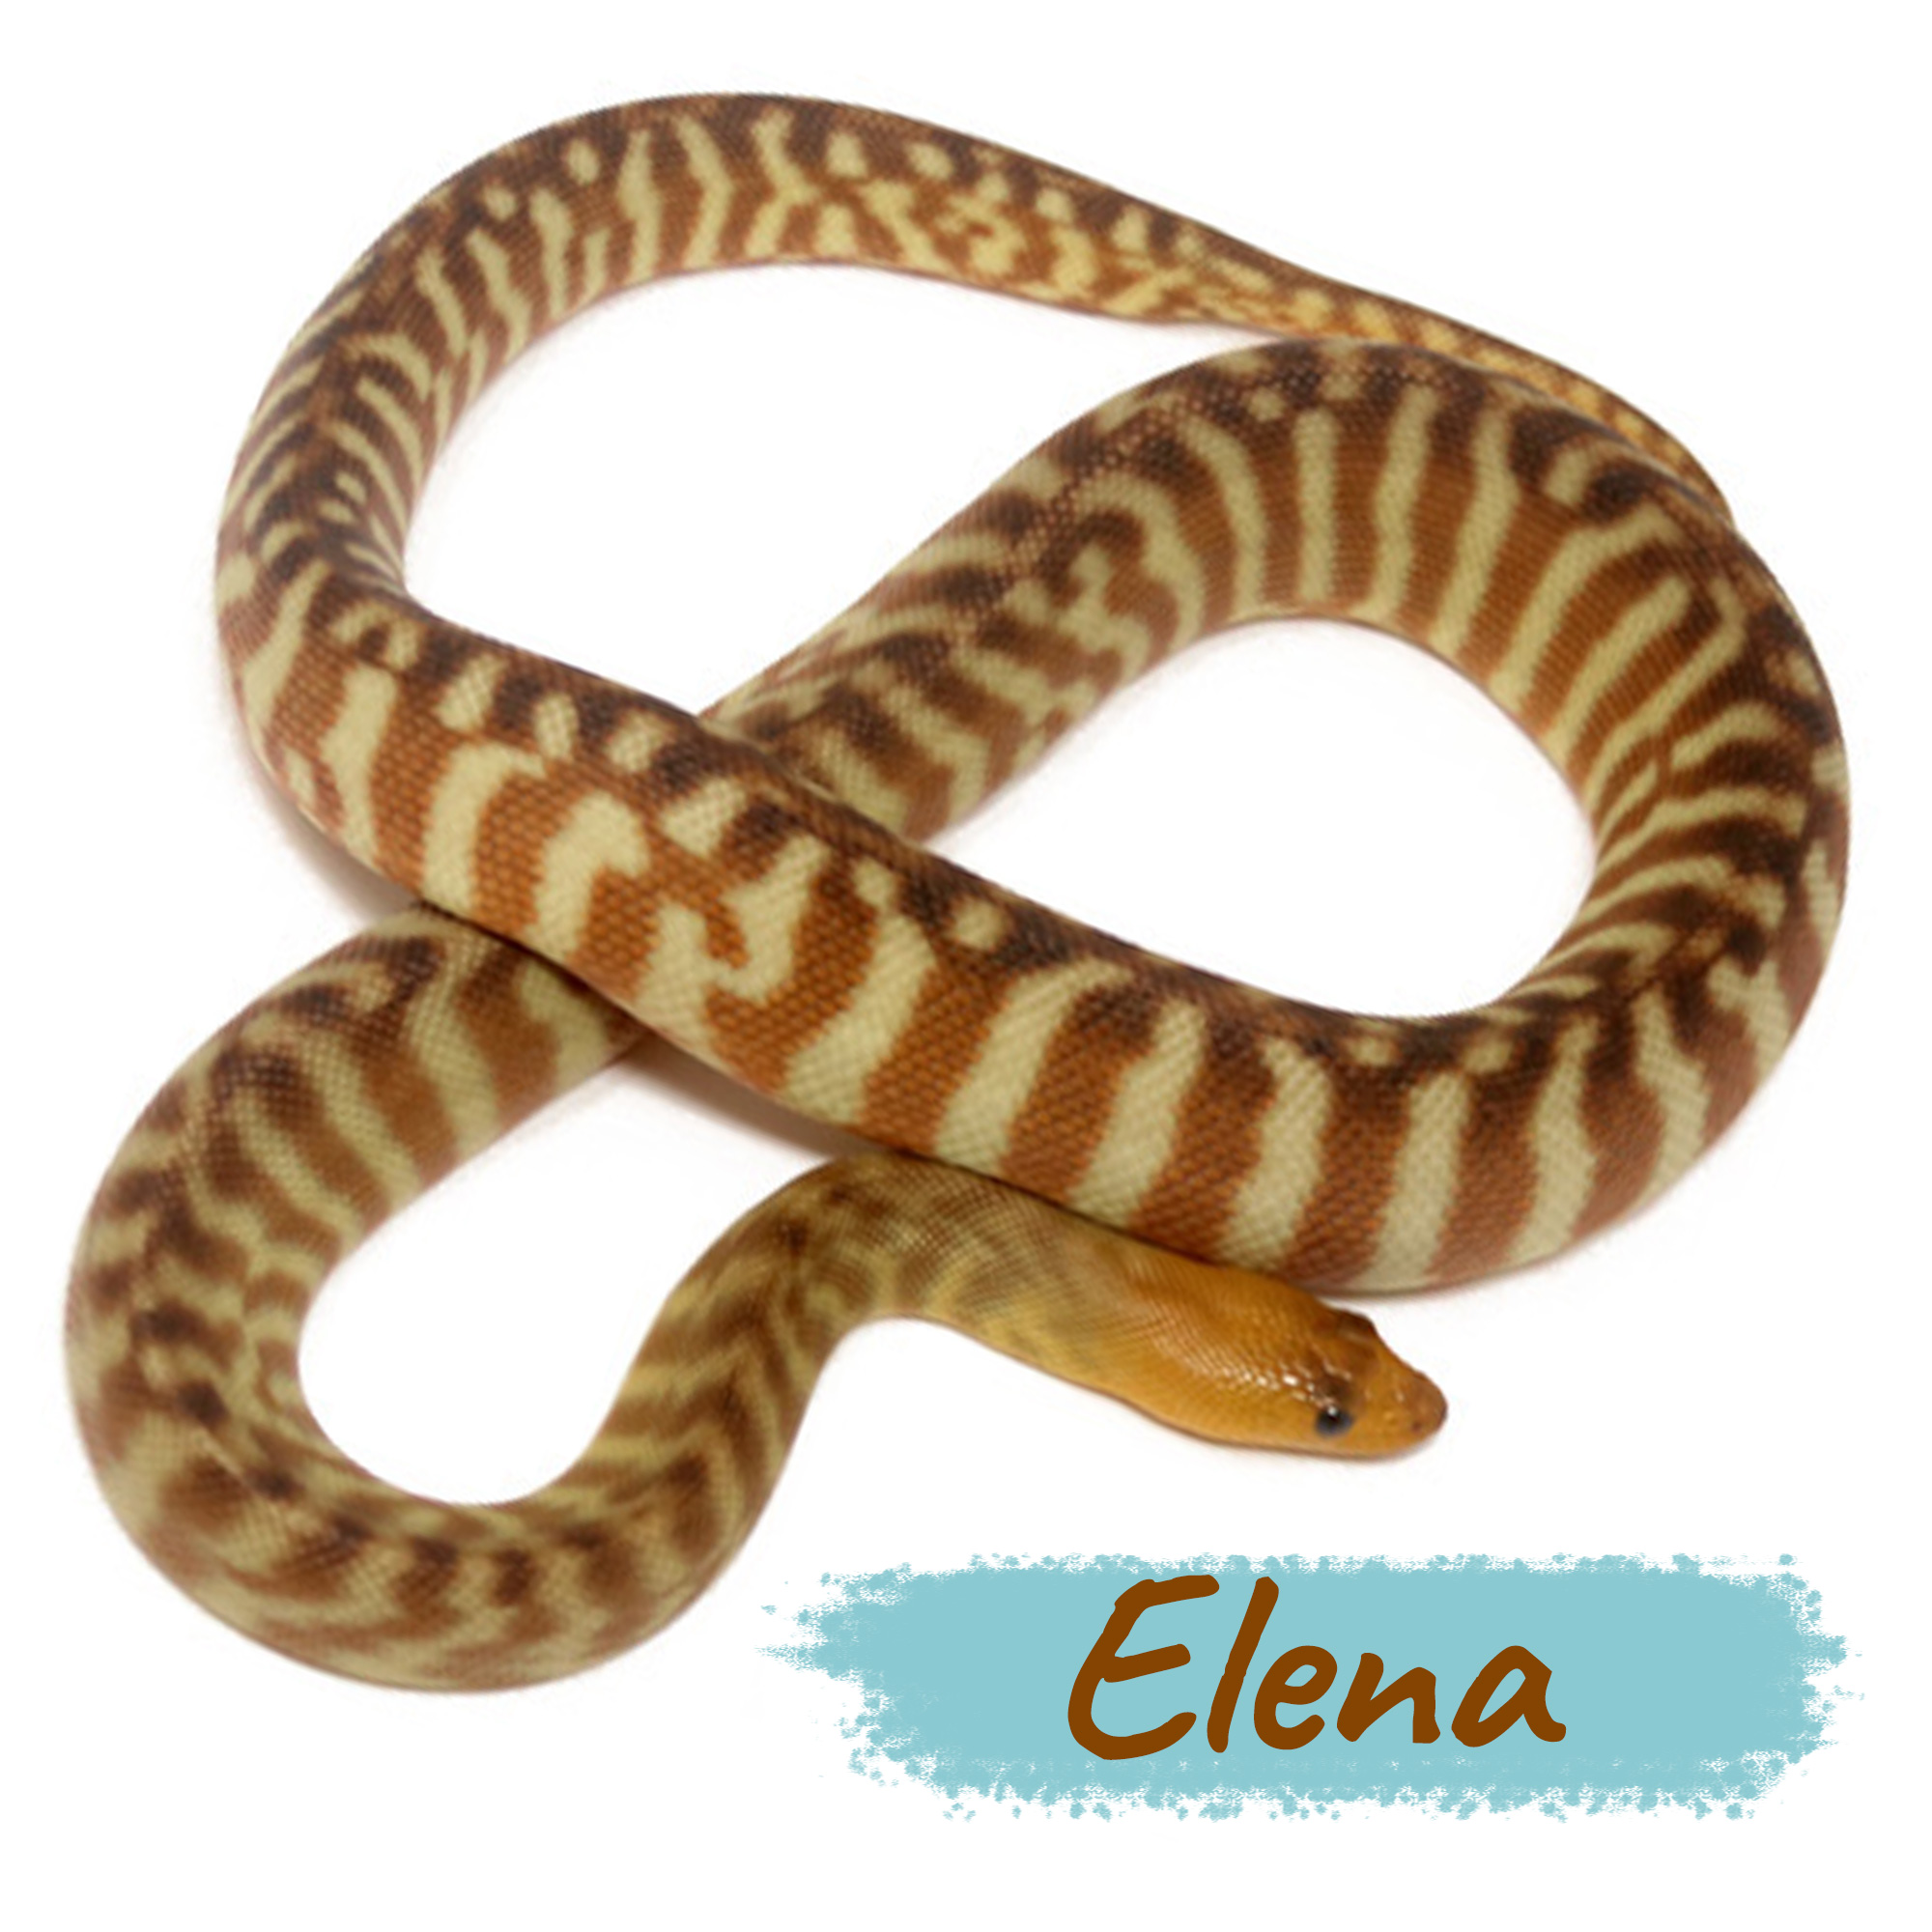 Elena Woma Python (Aspidites ramsayi)